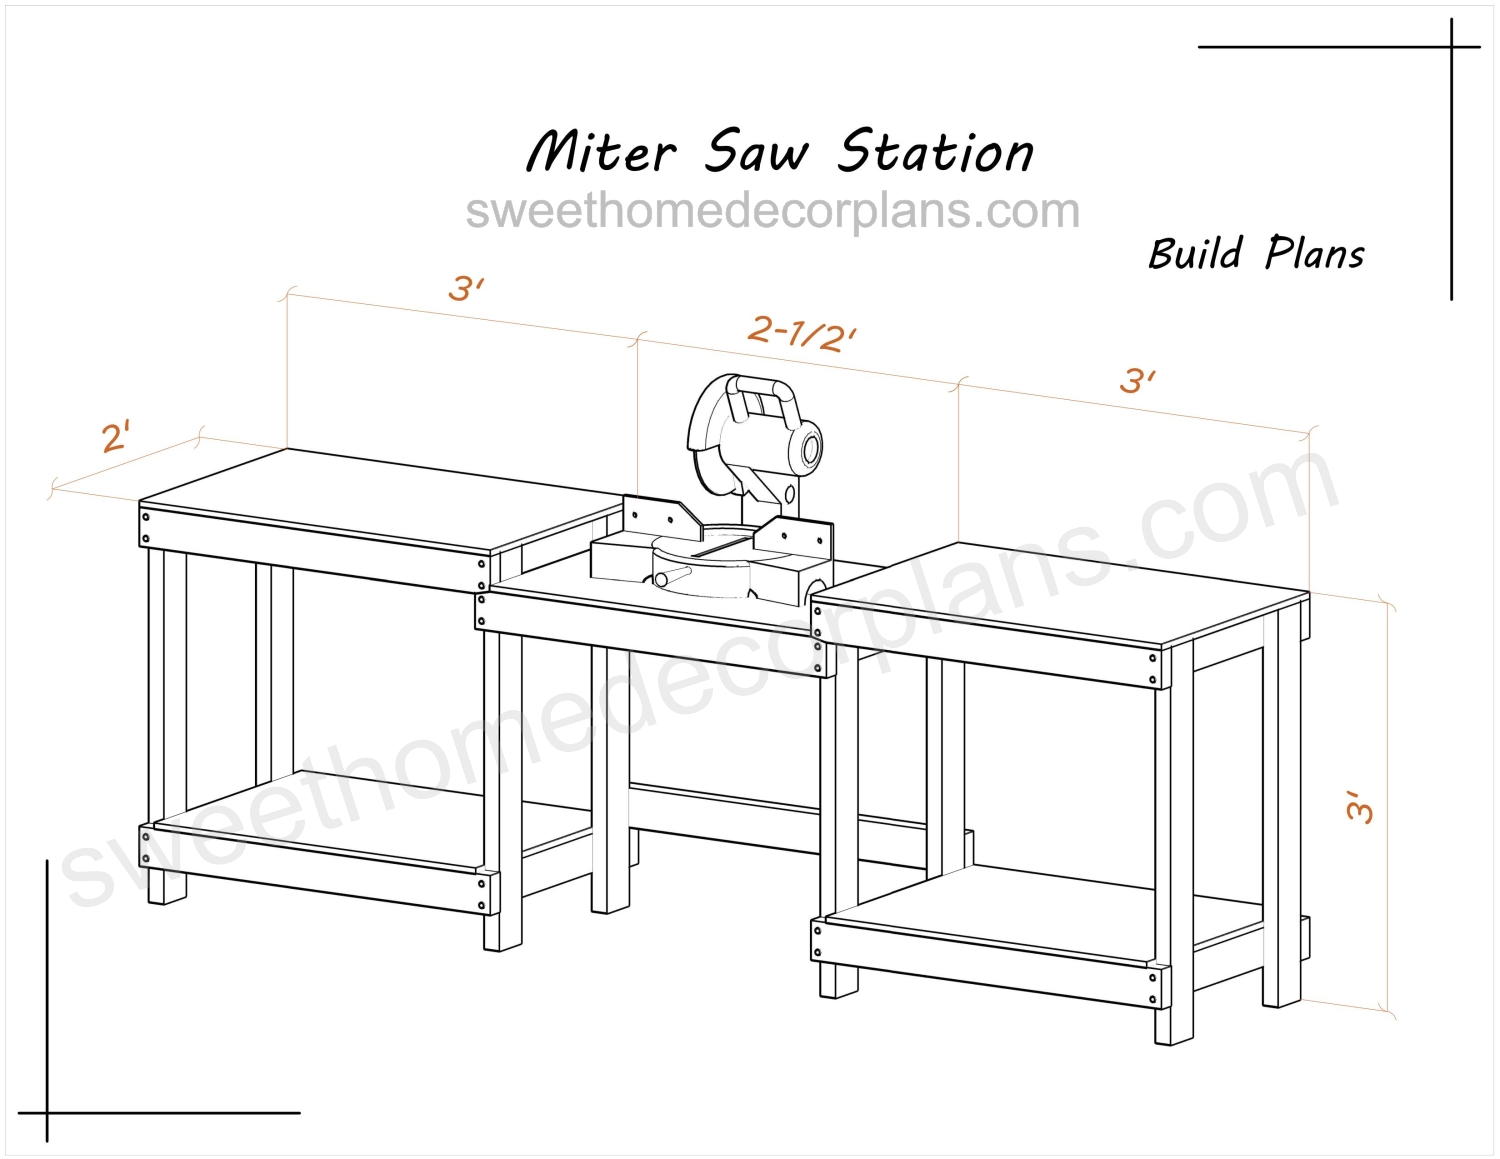 miter-saw-station-plans-in-pdf